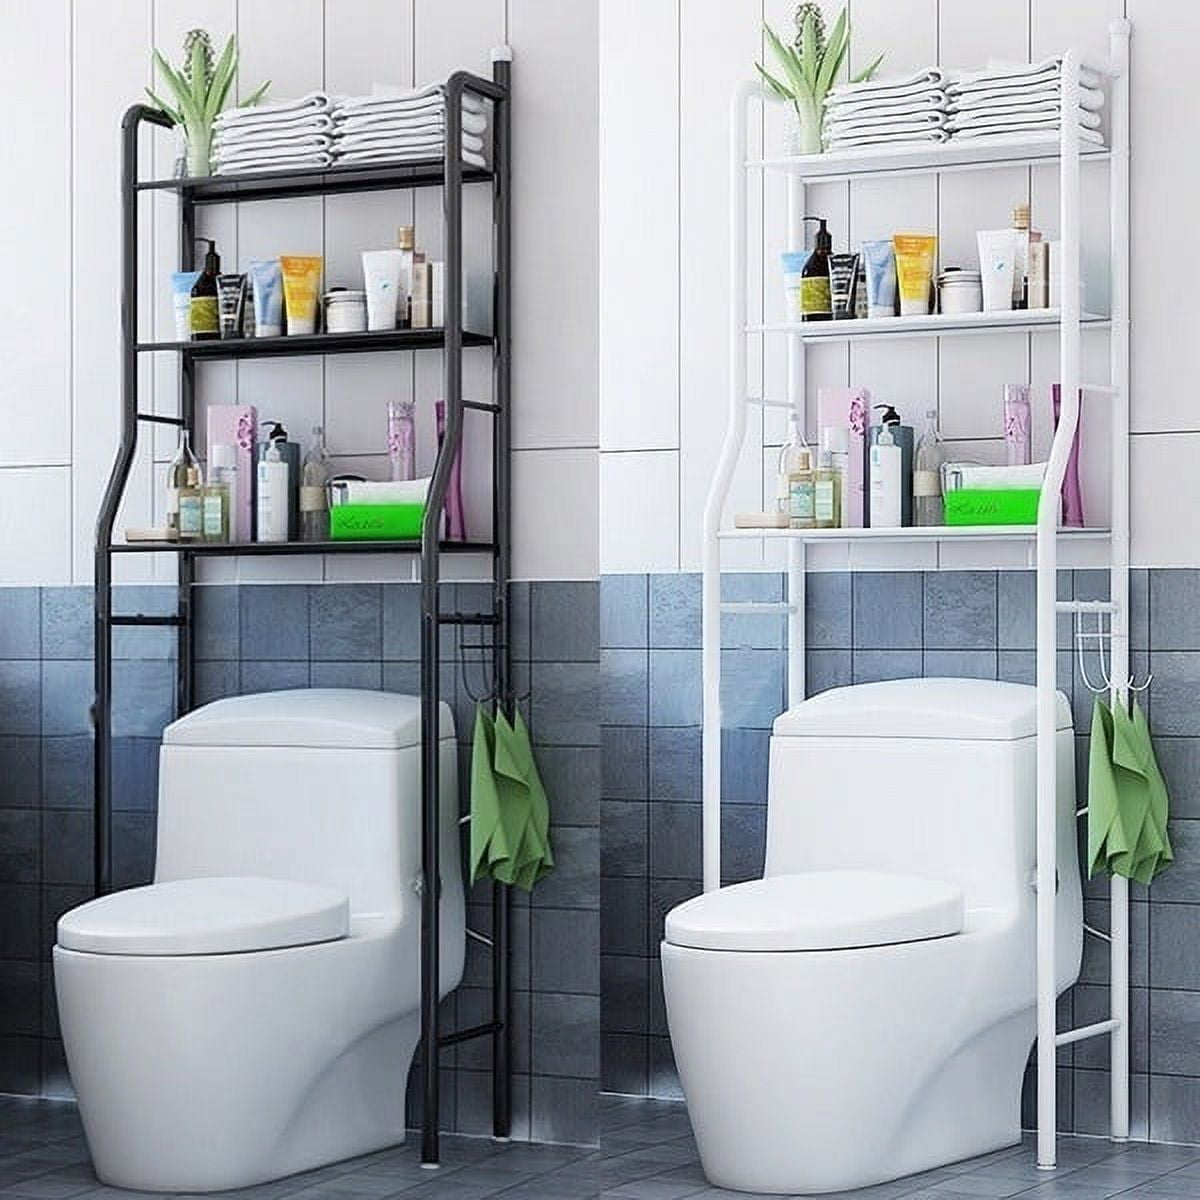 Etta Avenue™ Marisa Chrome Freestanding Over-the-Toilet 3 Shelf Storage  Etagere& Reviews